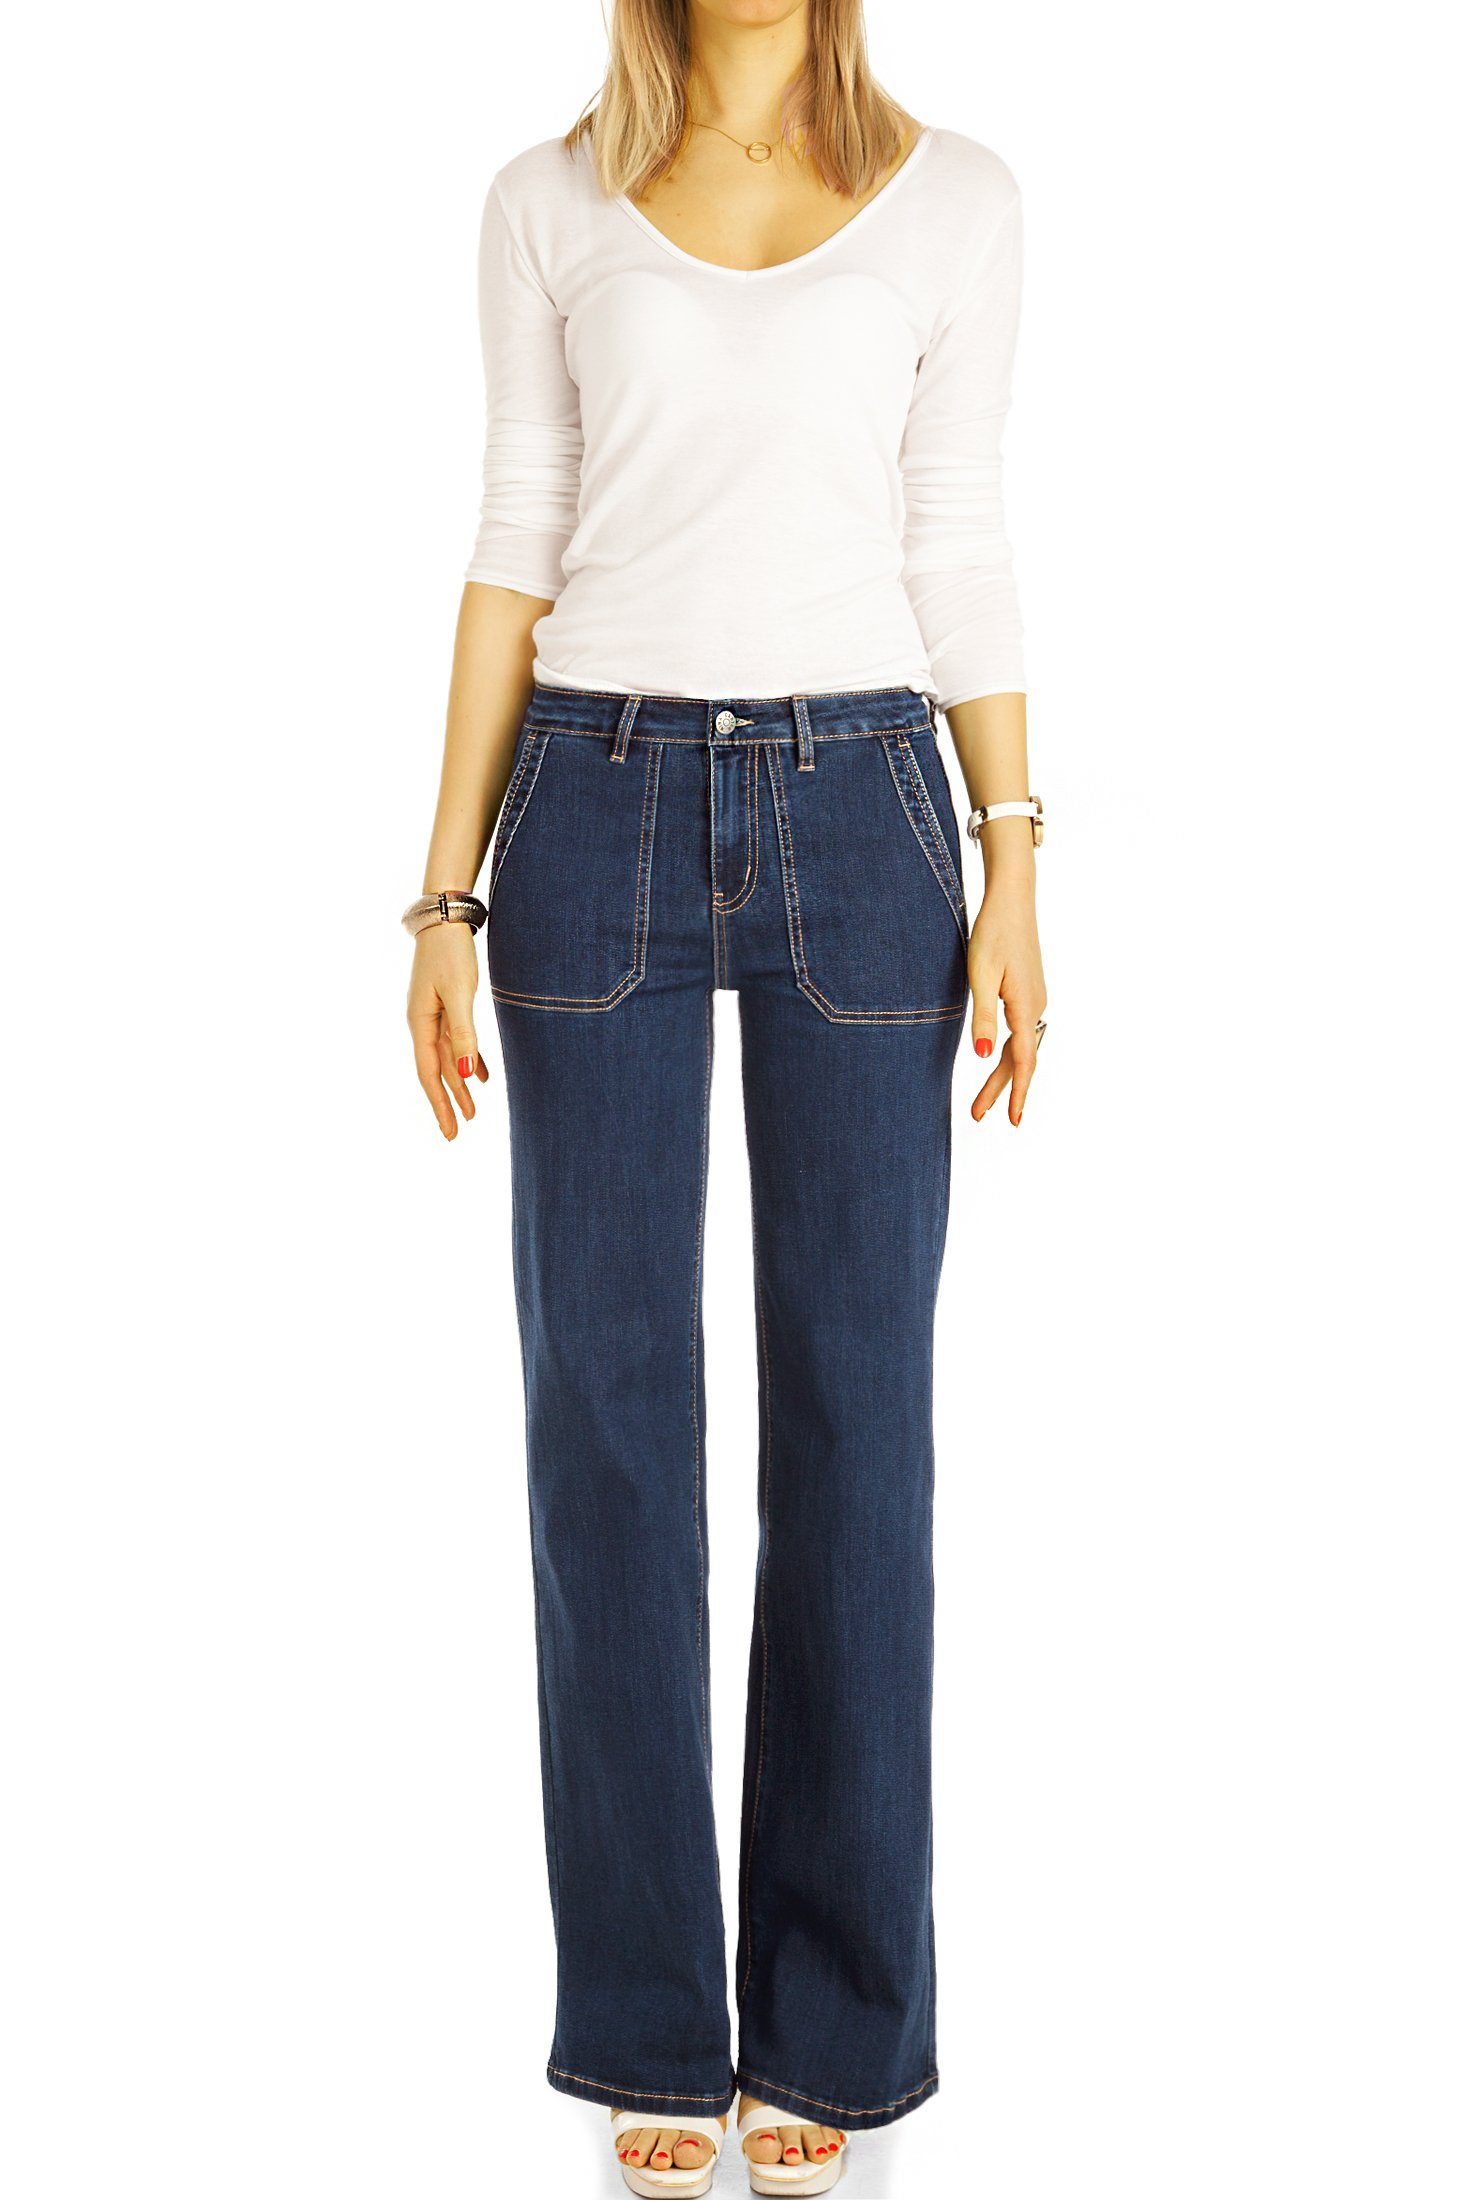 waist mit Hosen be Stretch-Anteil, Passform 5-Pocket-Style straight Jeans, j31k - Bootcut-Jeans Damen Bootcut - hellblau styled medium